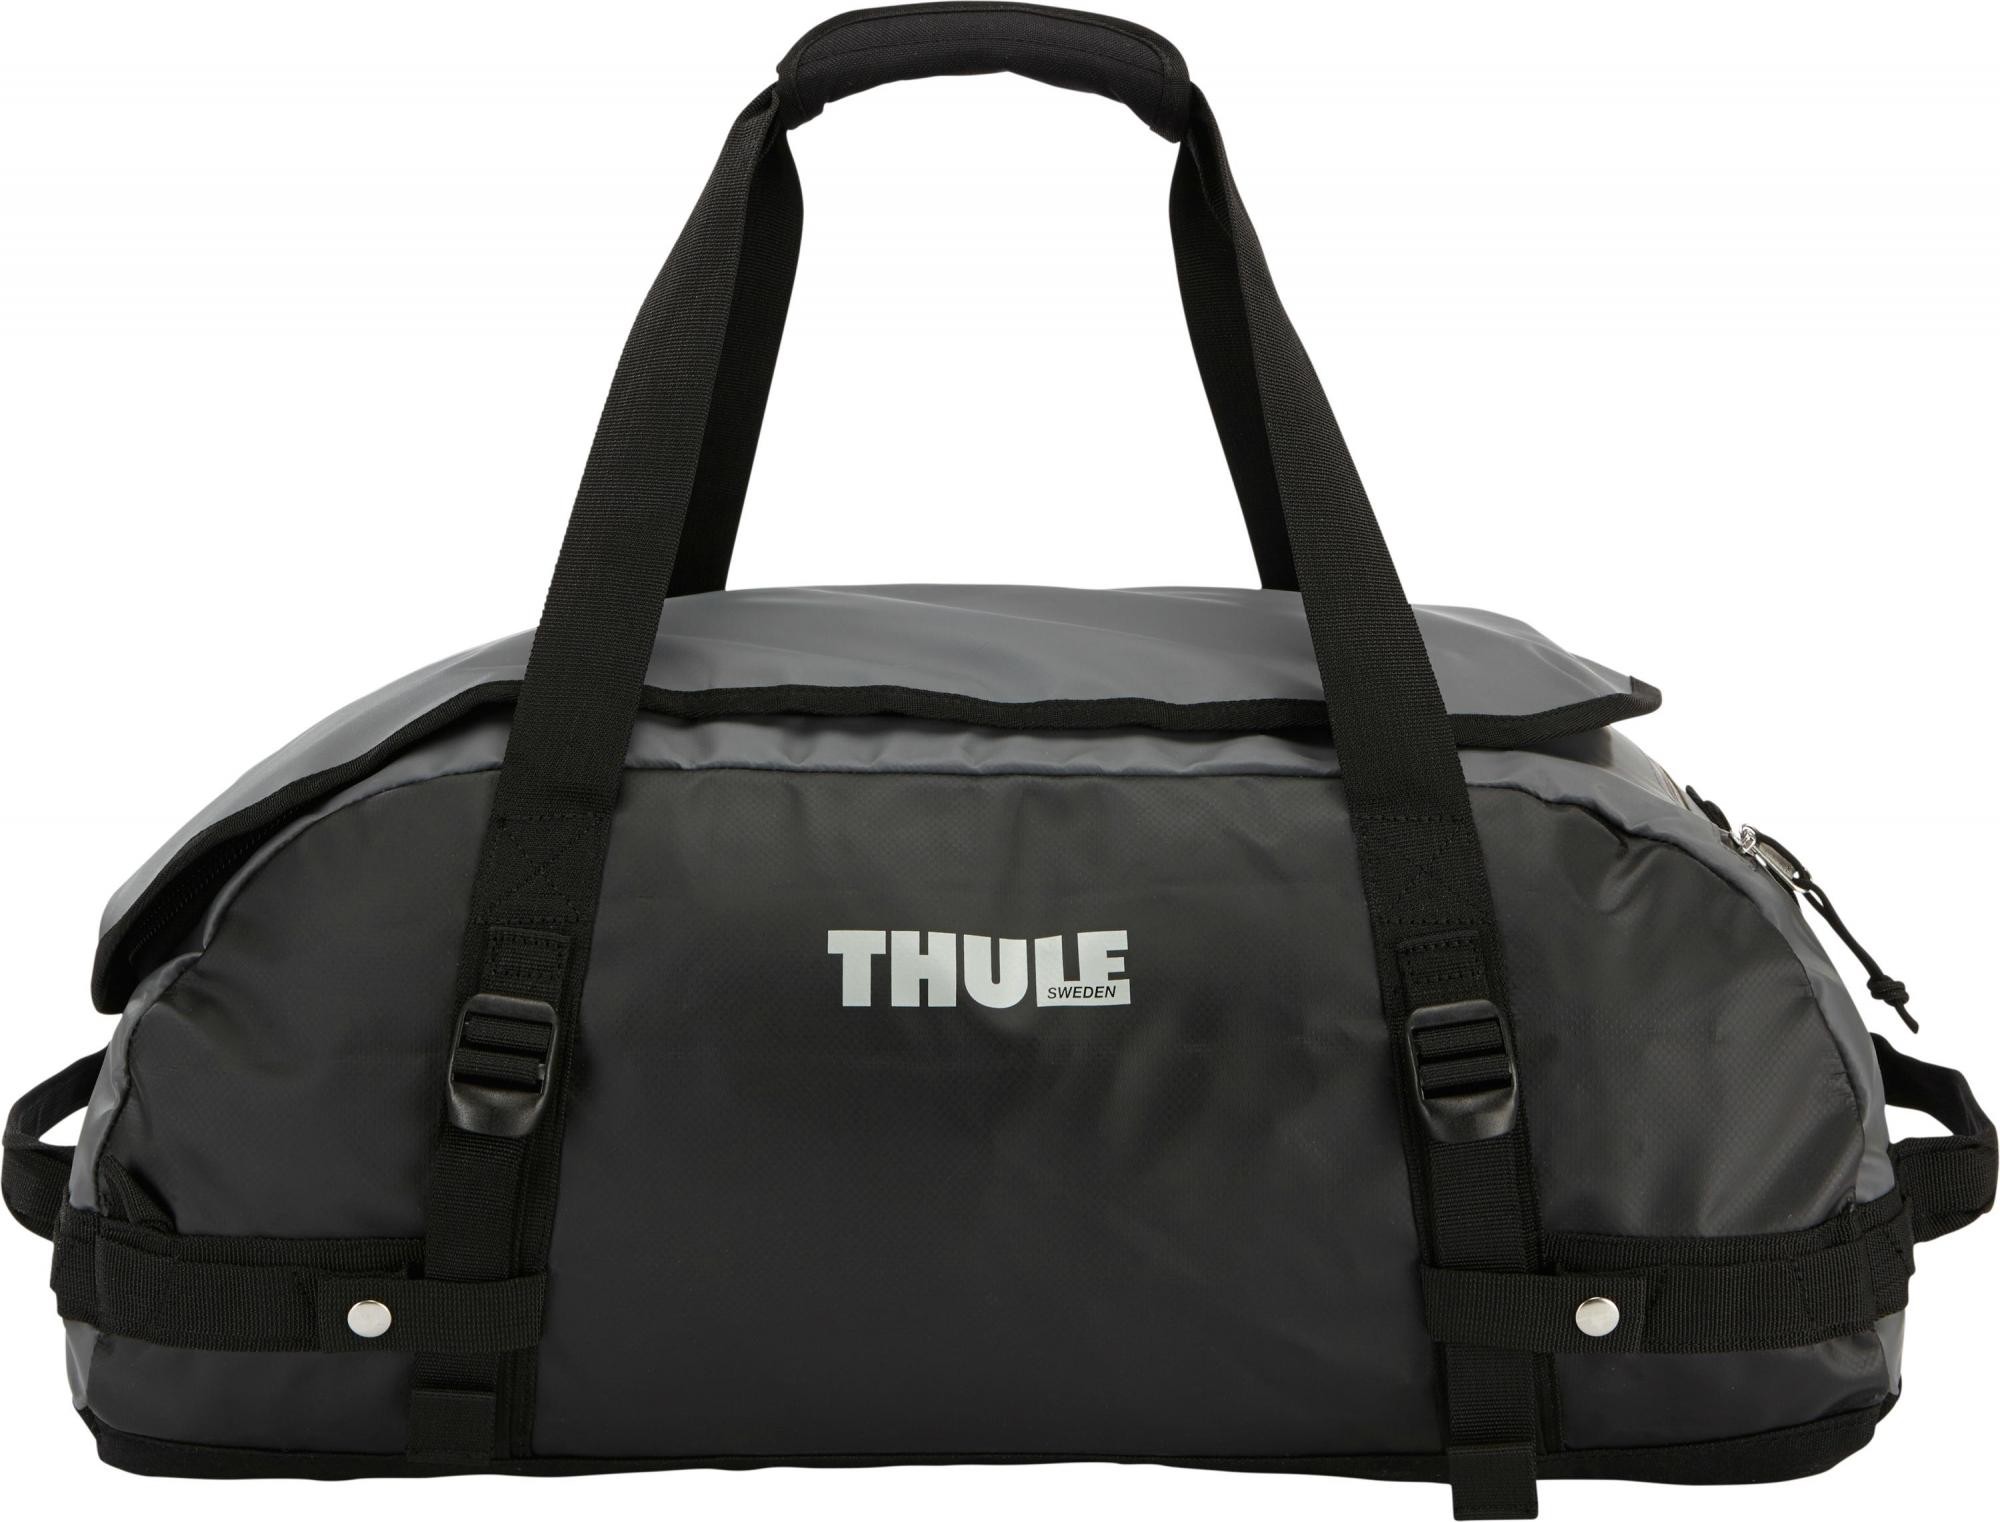 Thule Travel Bag. Thule Chasm Sport Duffel Bag 90L, Olivine.